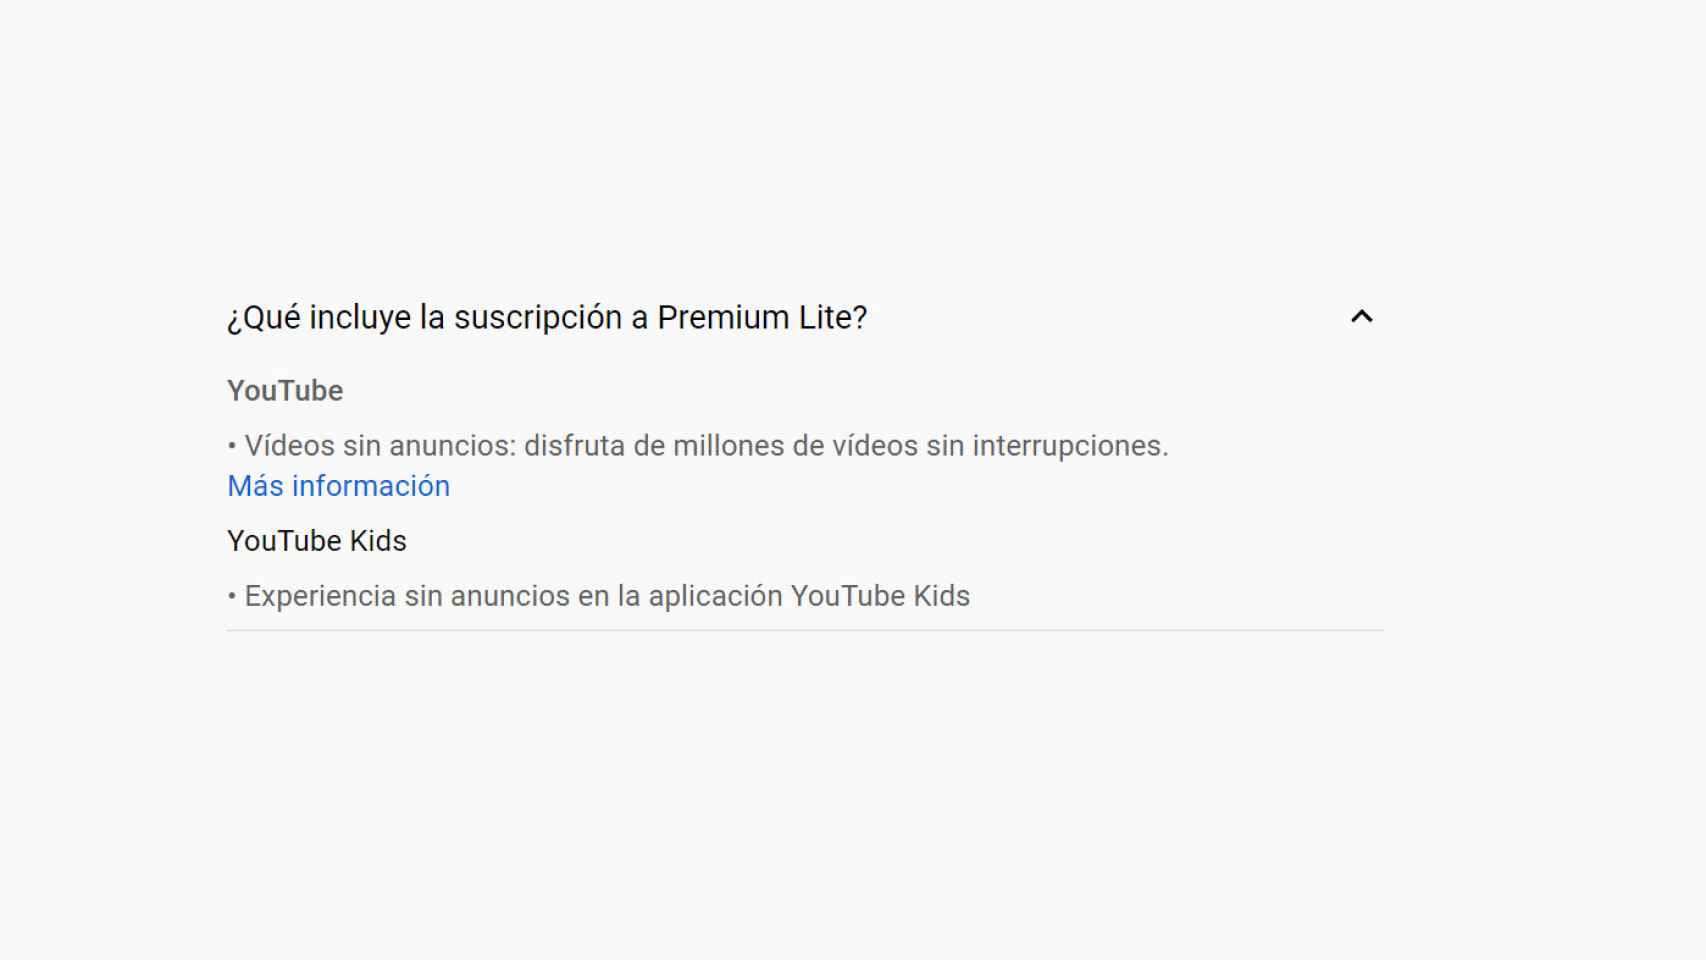 YouTube Premium Lite